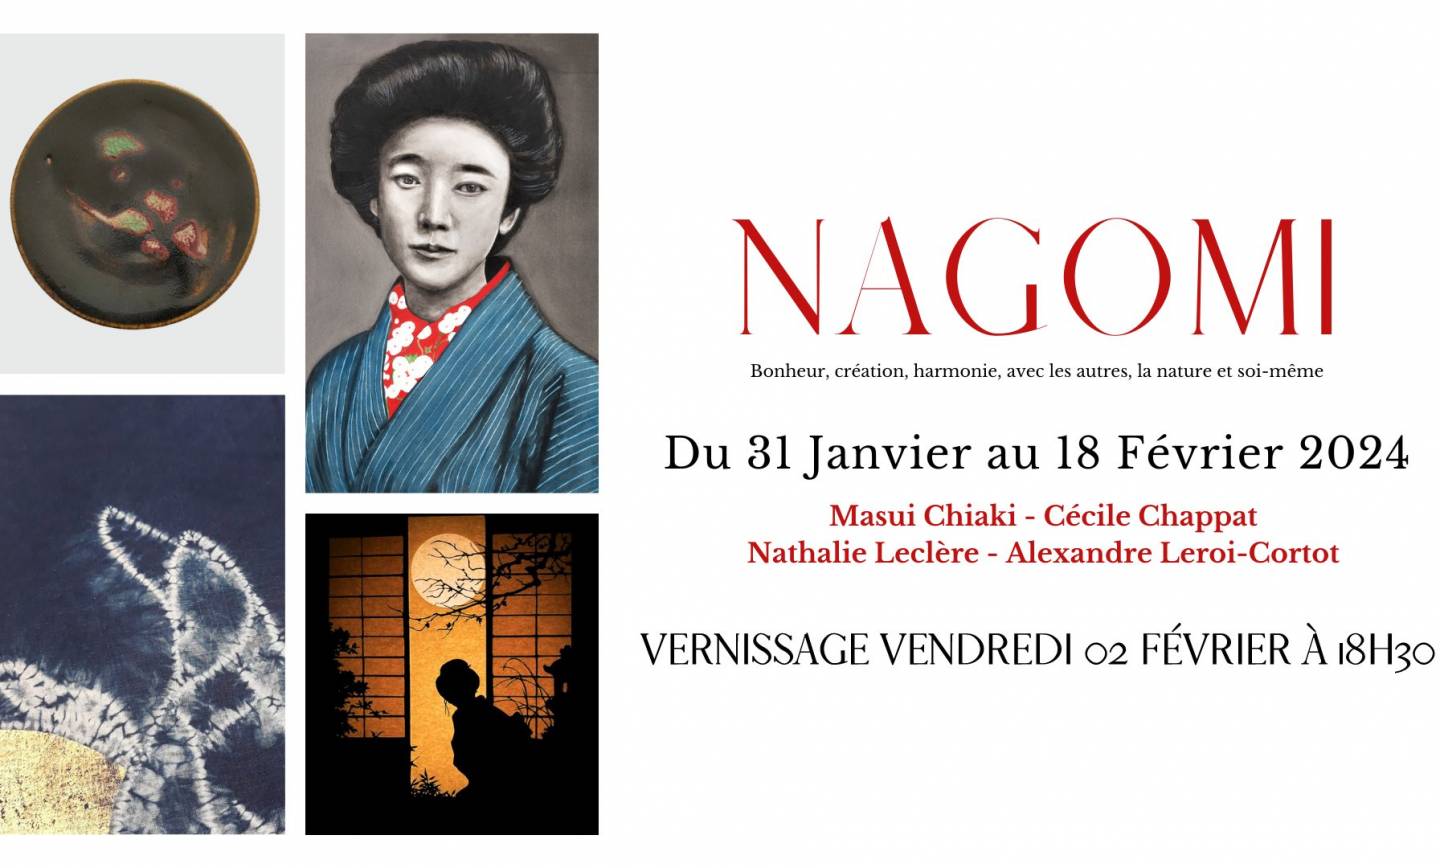 Exposition “Nagomi” aux Ateliers Agora